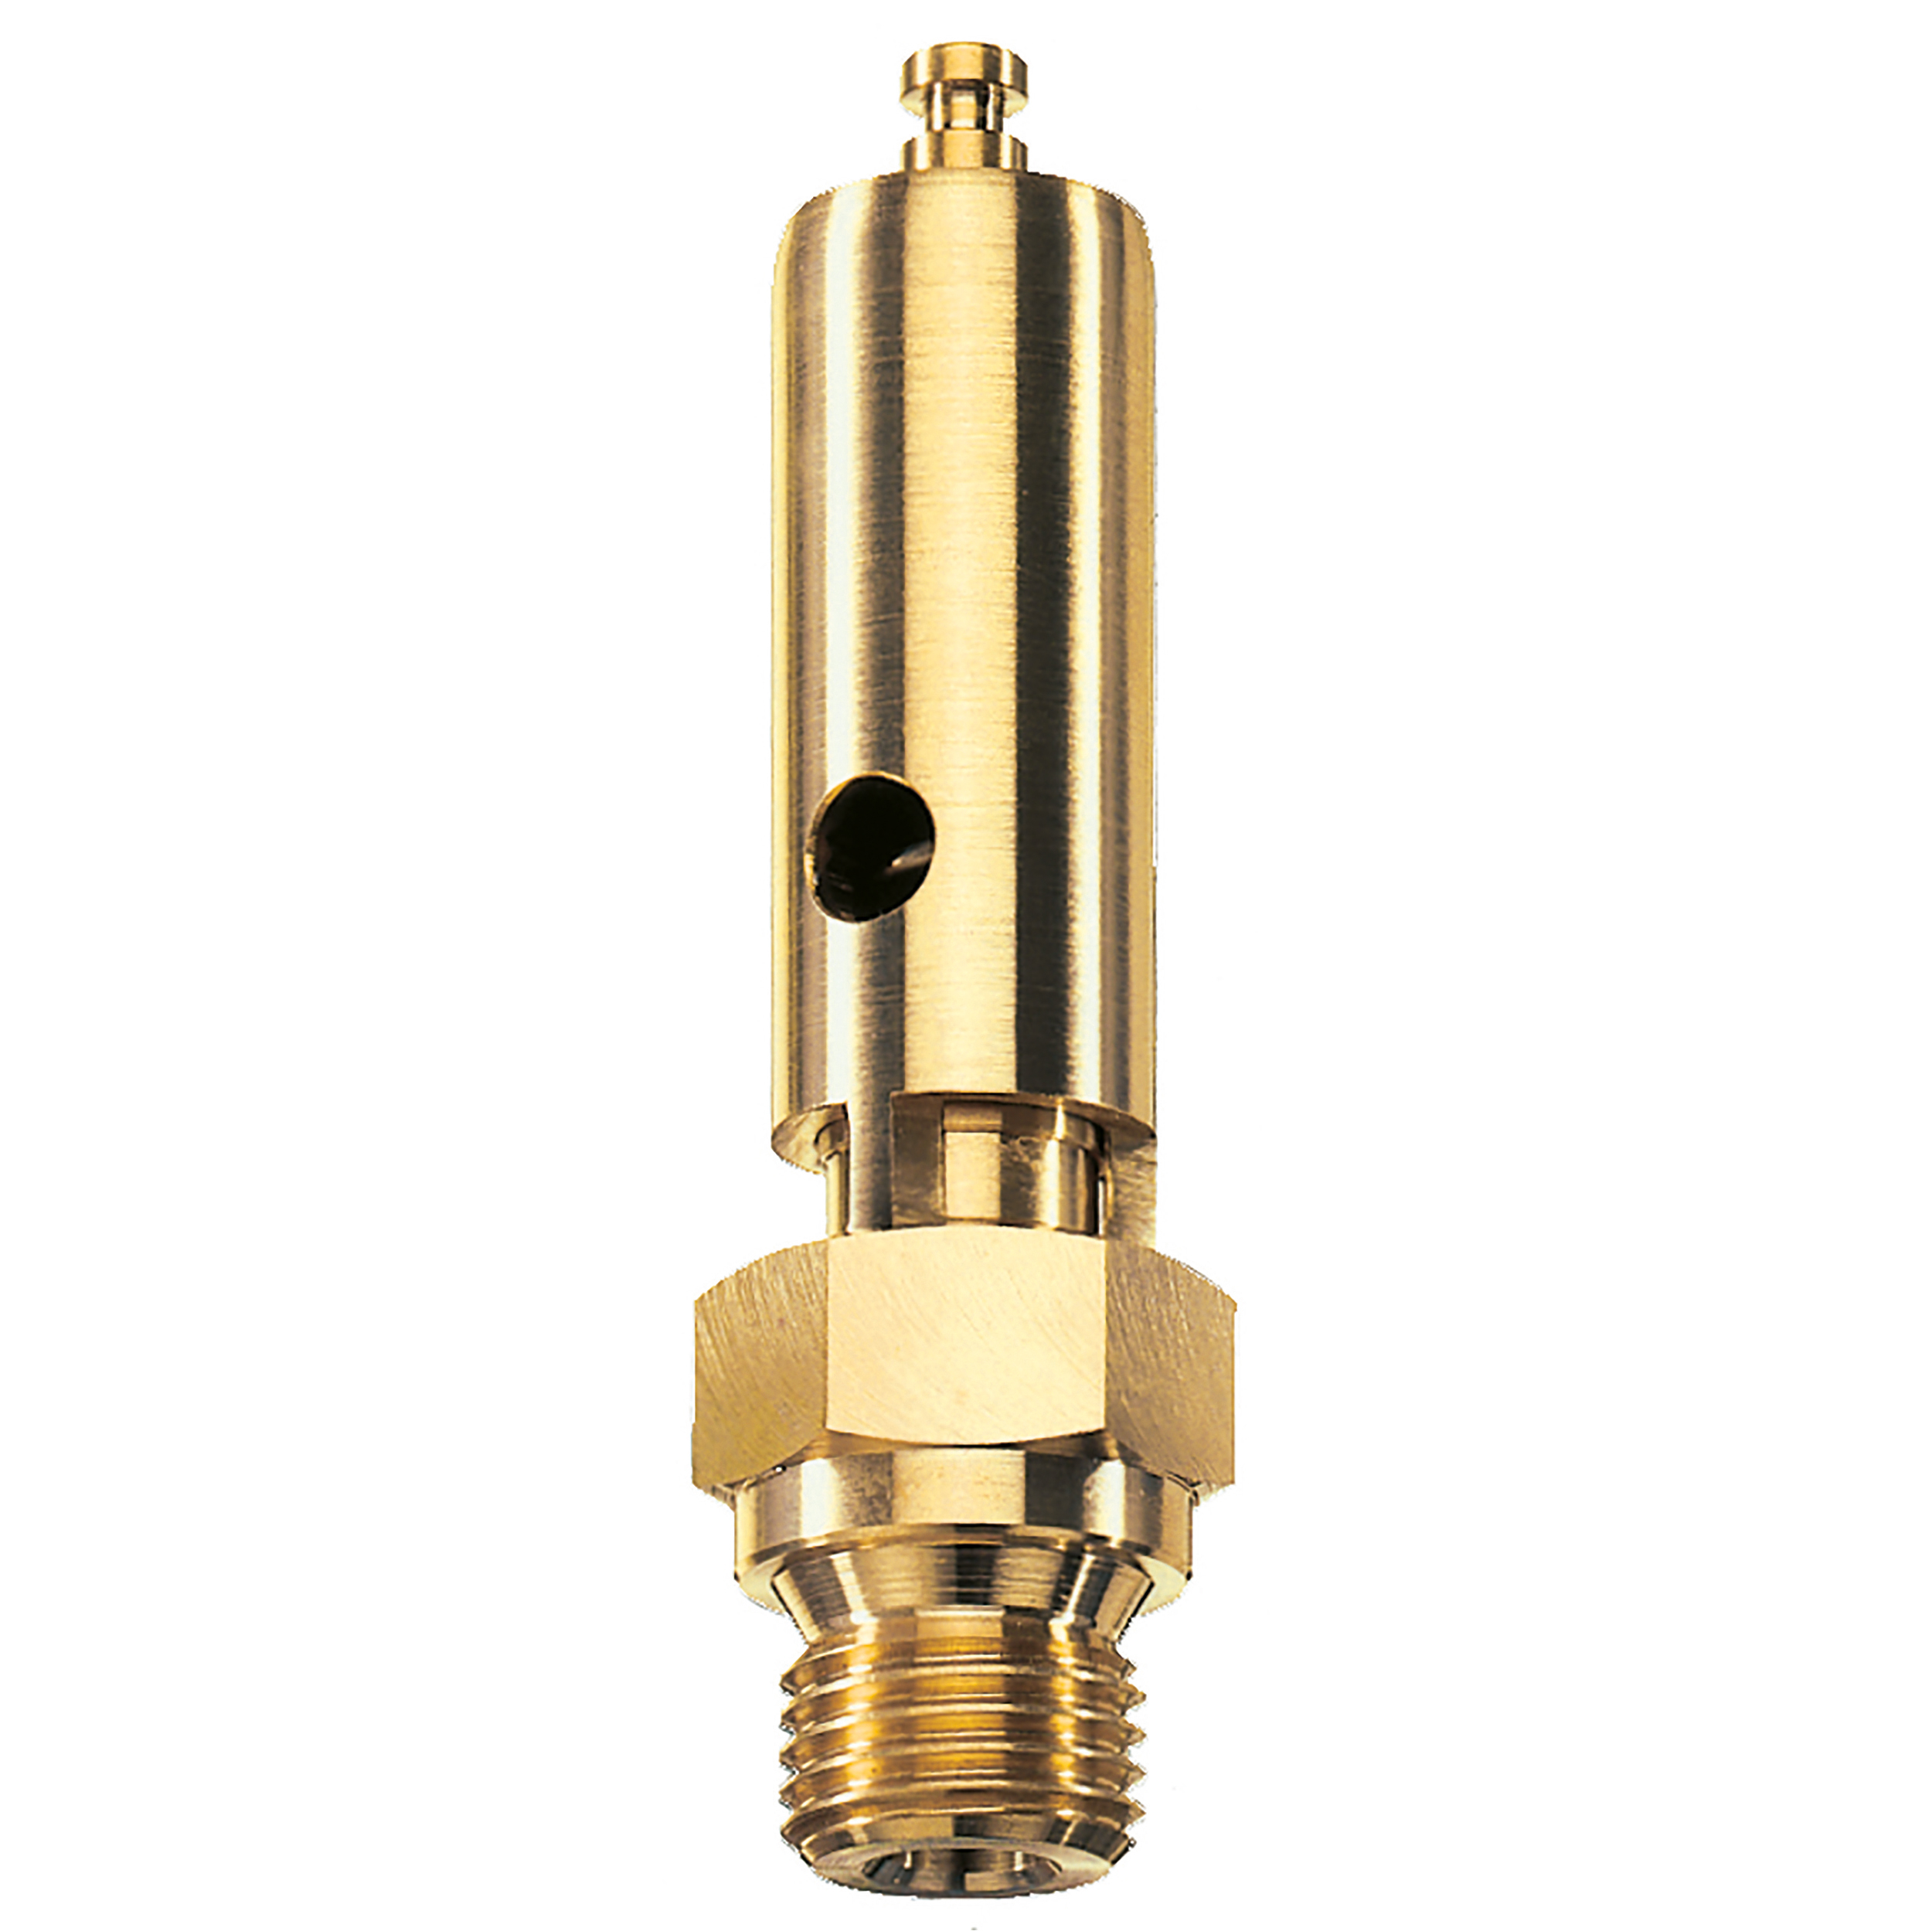 Component-tested safety valve DN 6, G⅜, pressure: 7.1-10 bar